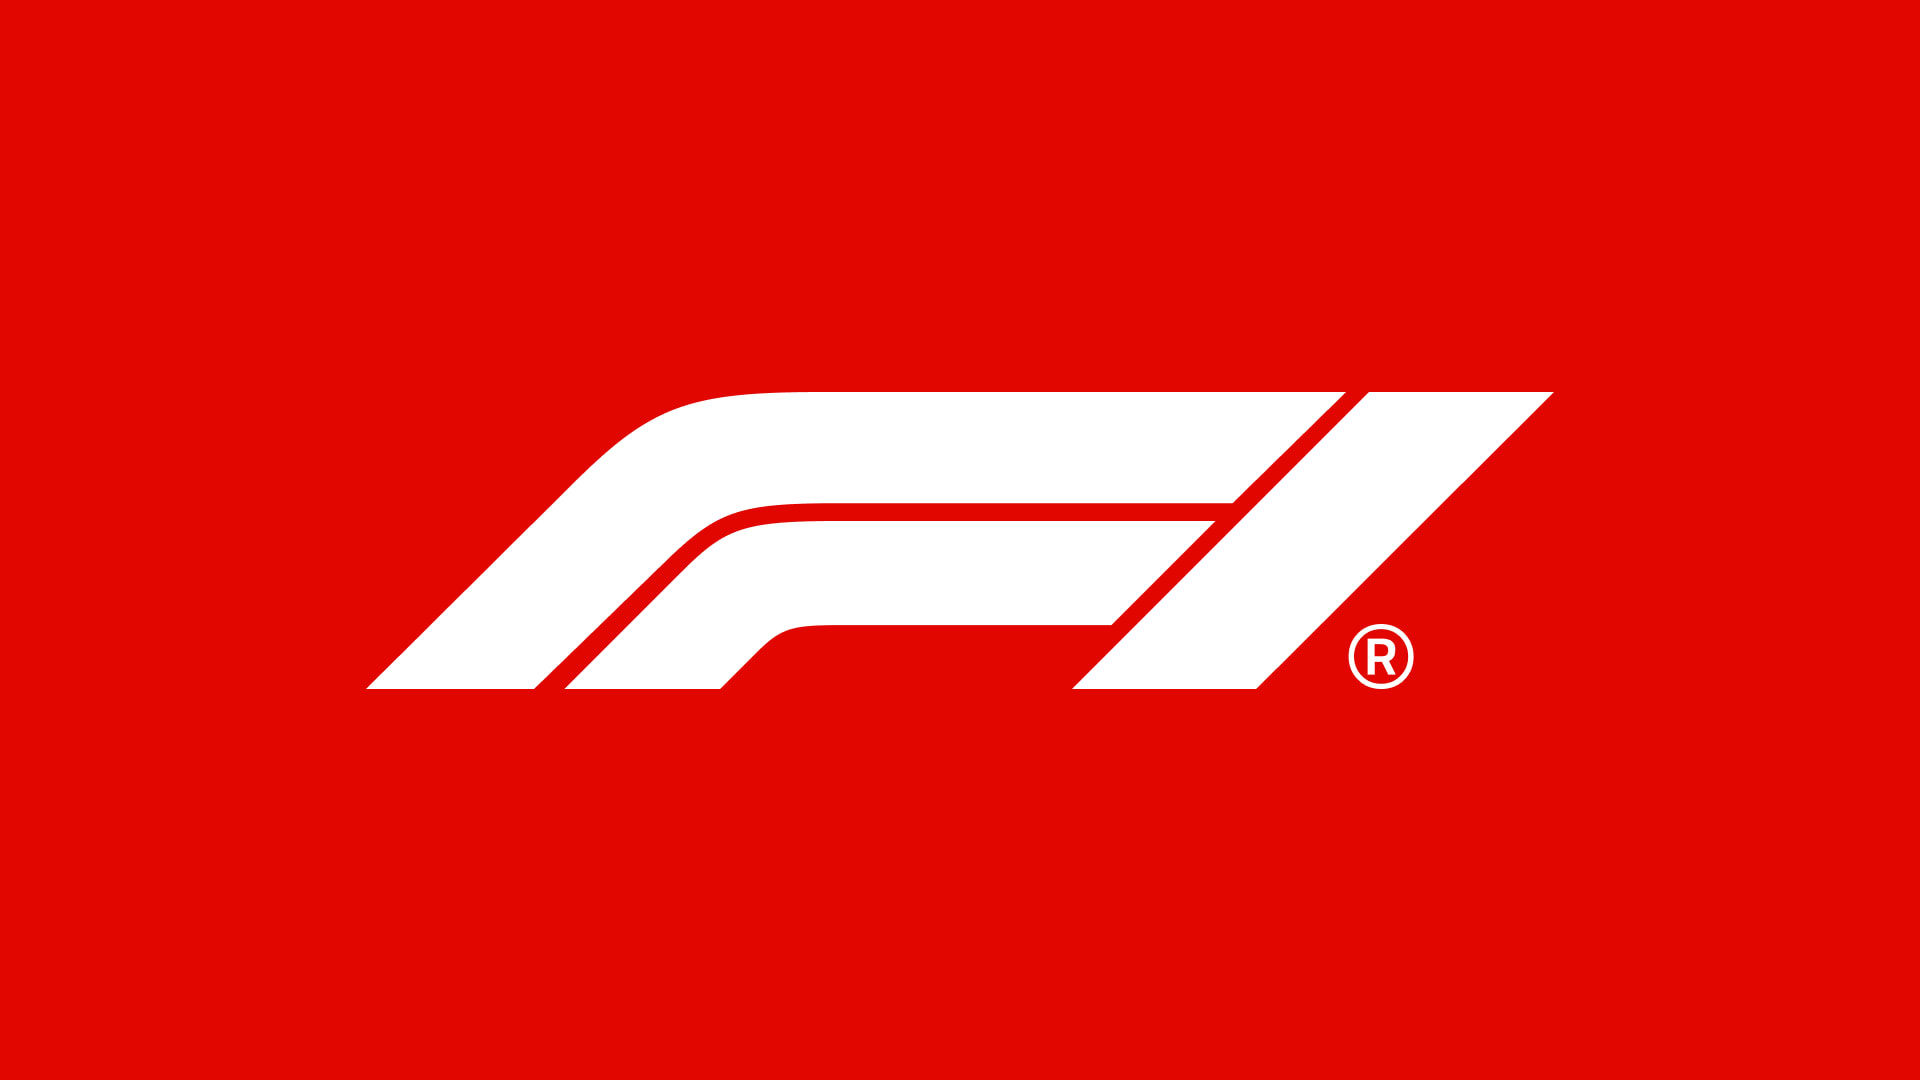 Formula 1 Images